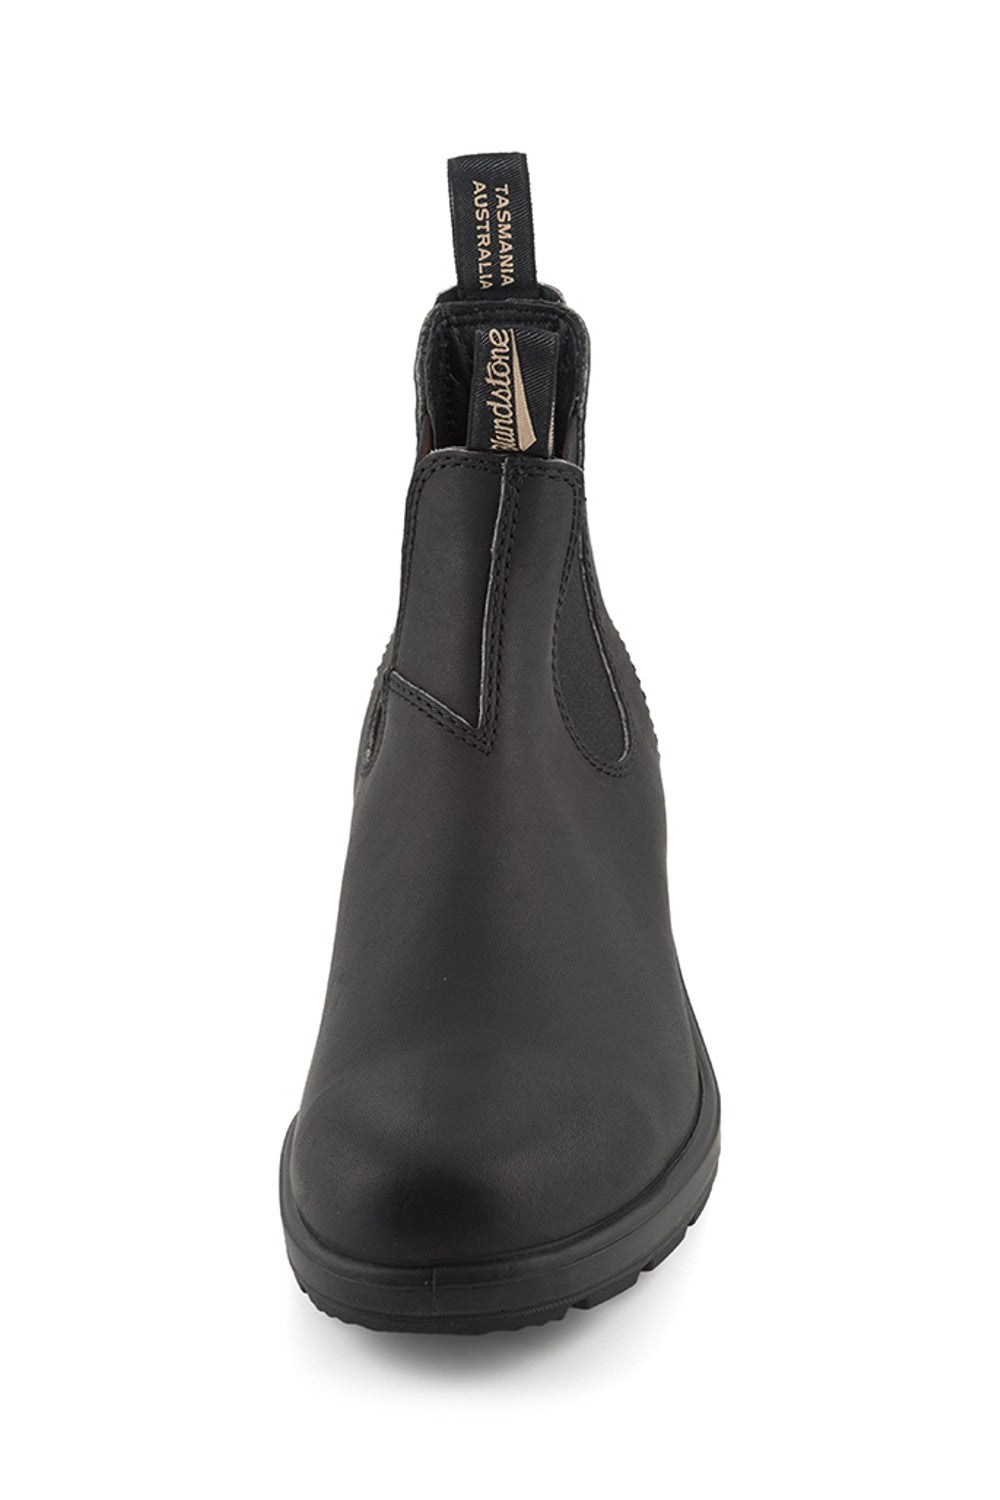 Blundstone 510 Original Voltan Black Leather Boots